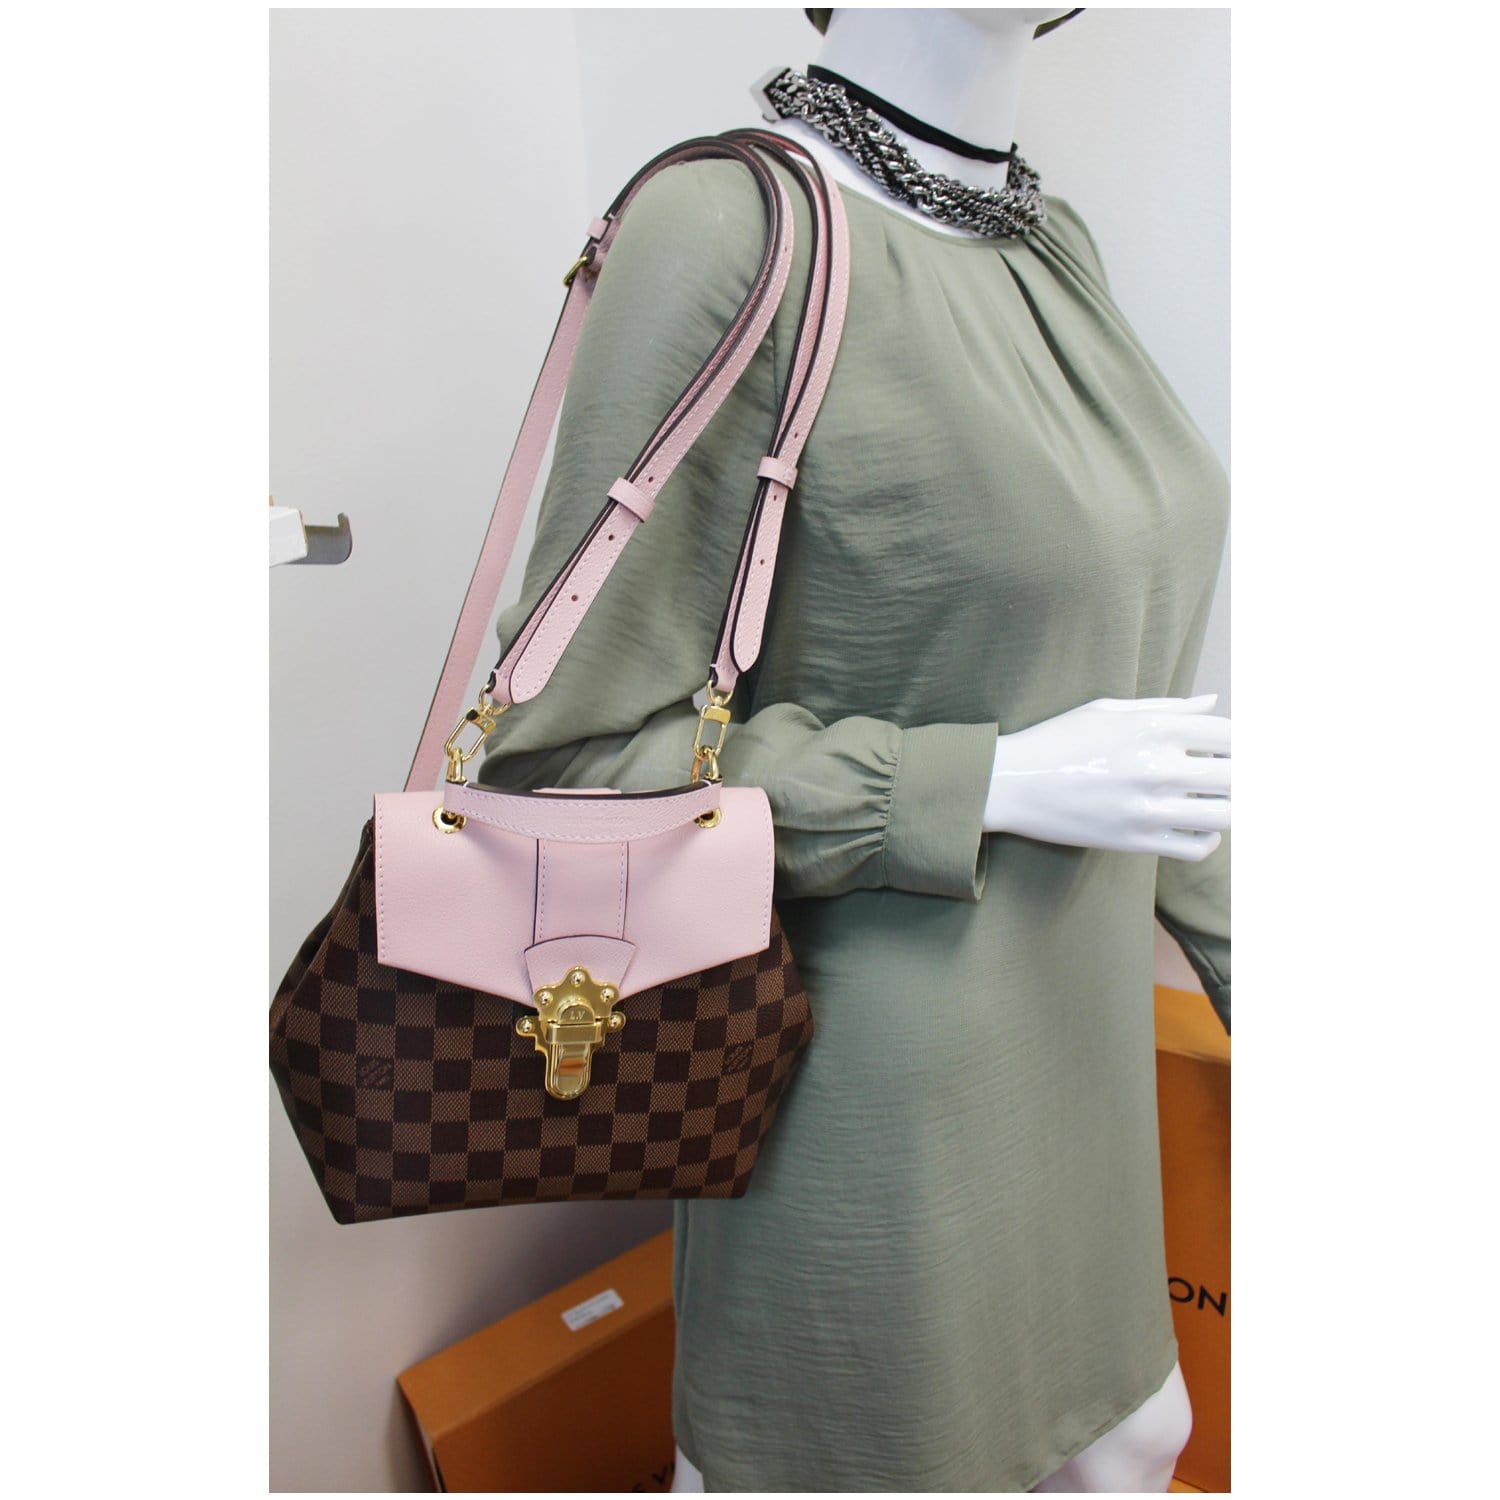 Louis Vuitton lv woman small backpack Damier ebene